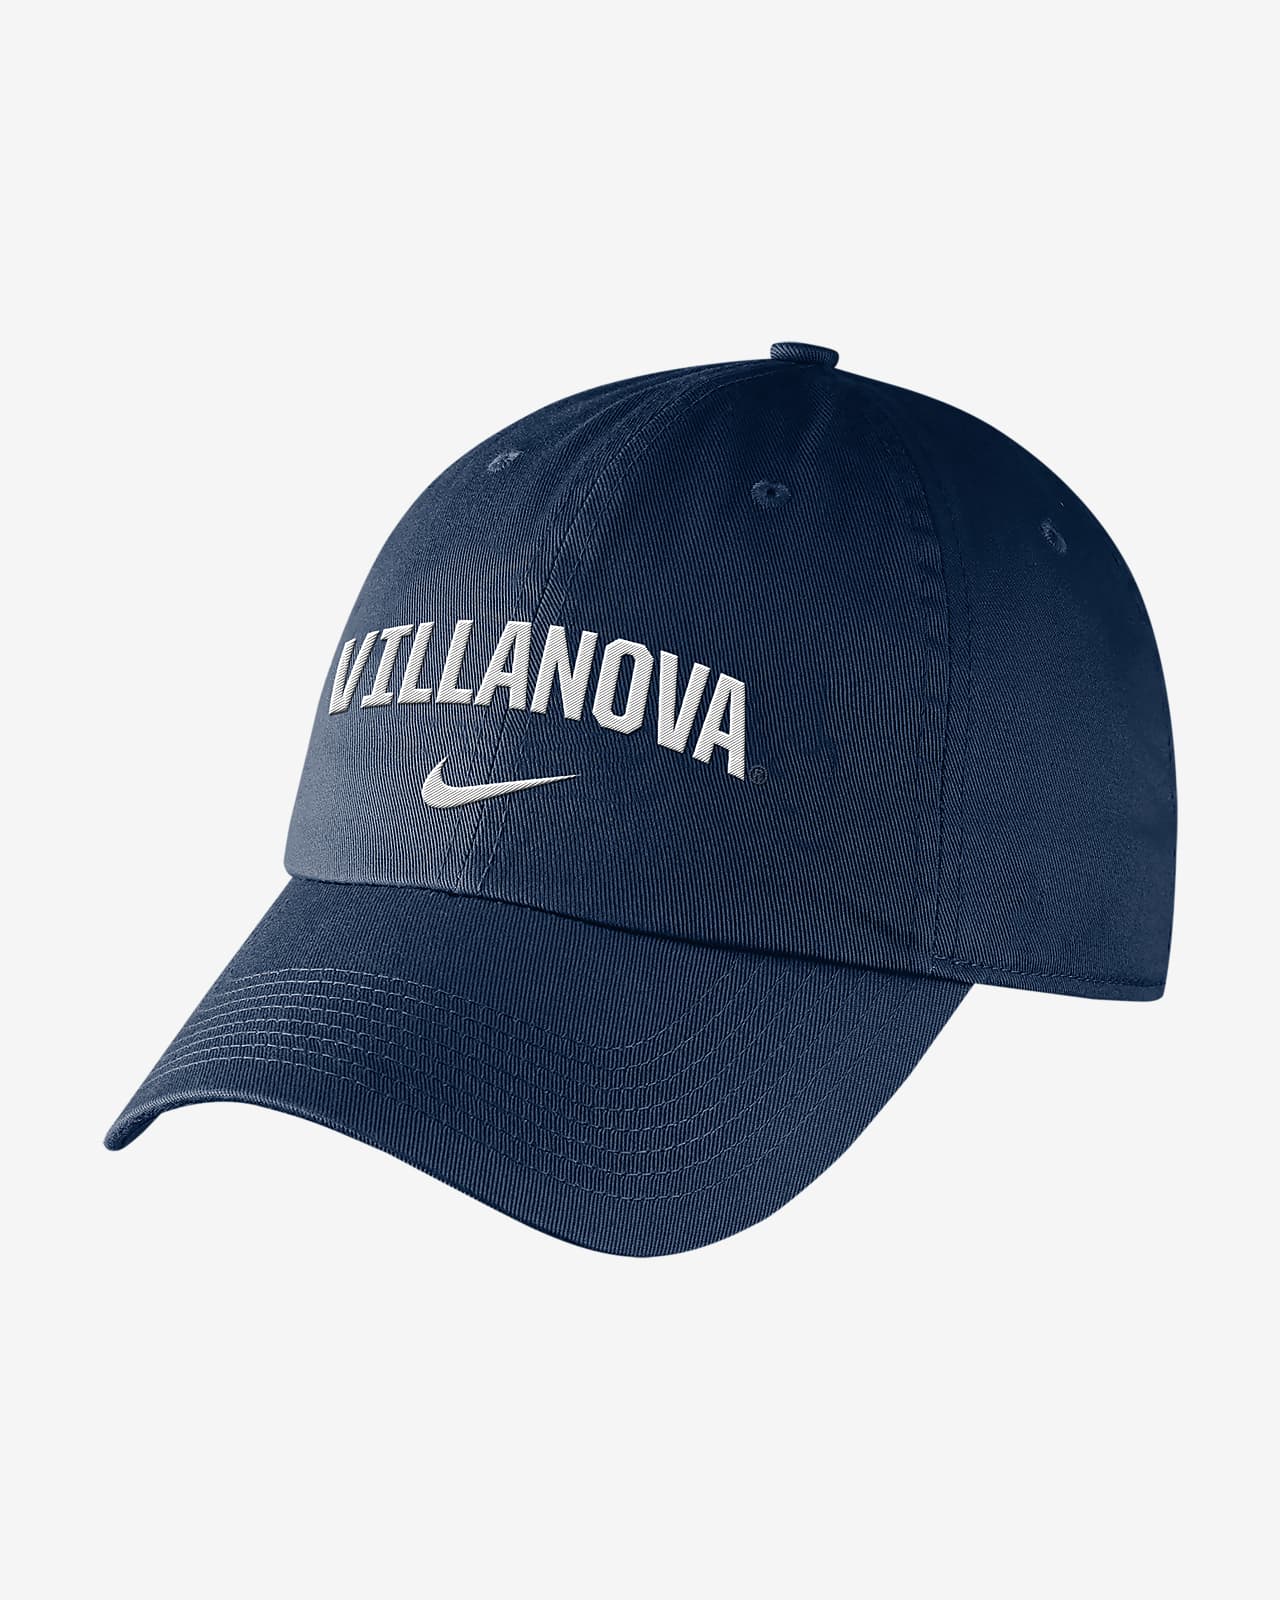 Nike College (Villanova) Hat